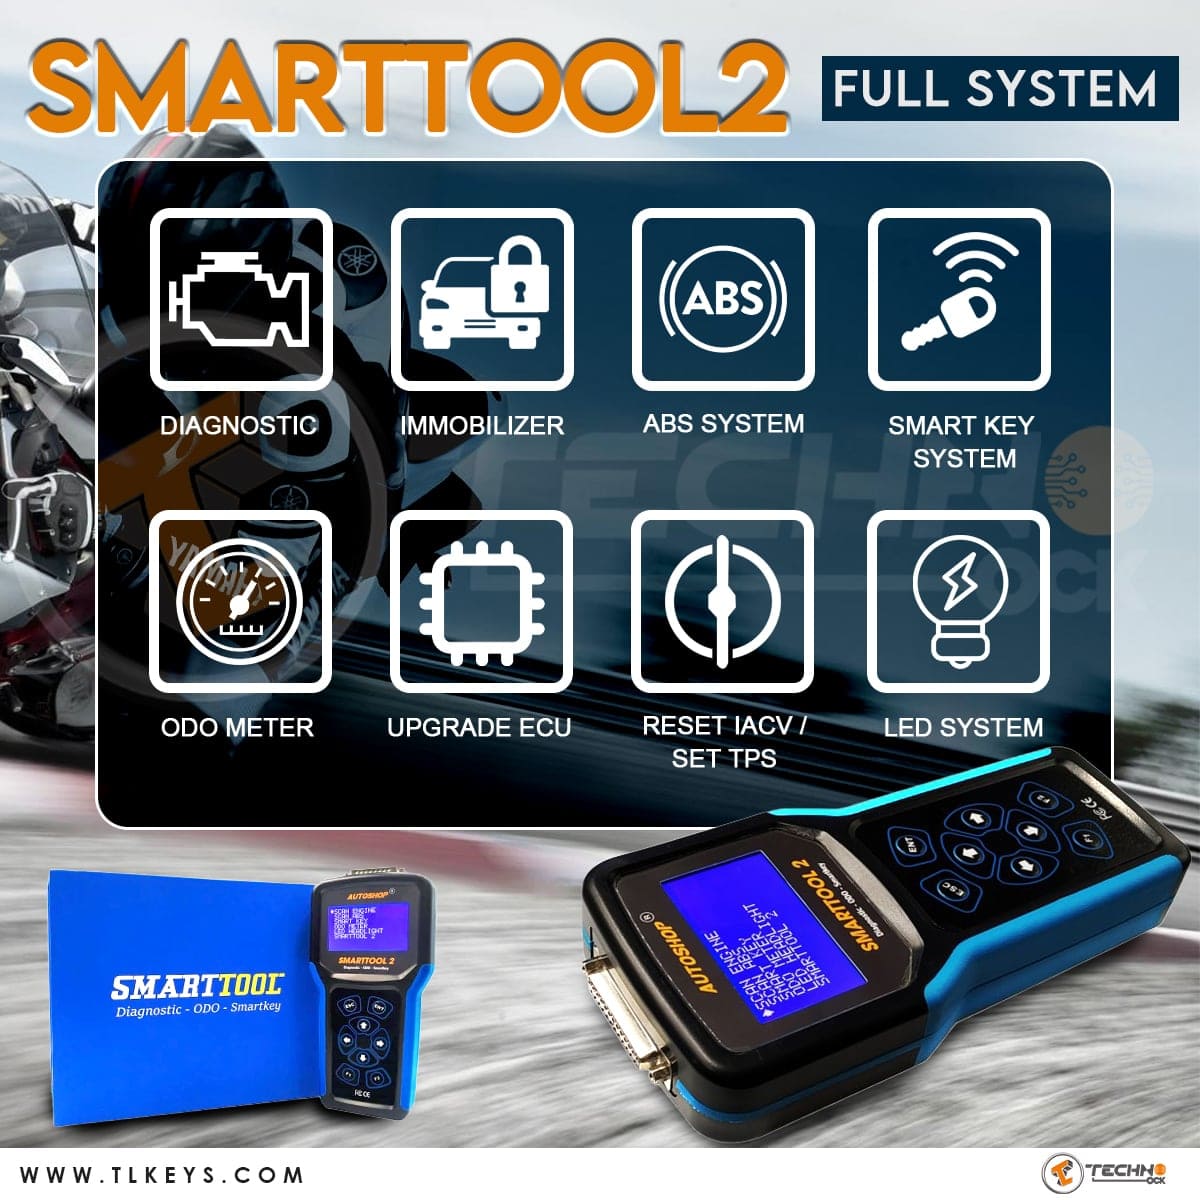 SMARTTOOL2 Full system Diagnostic, smart key